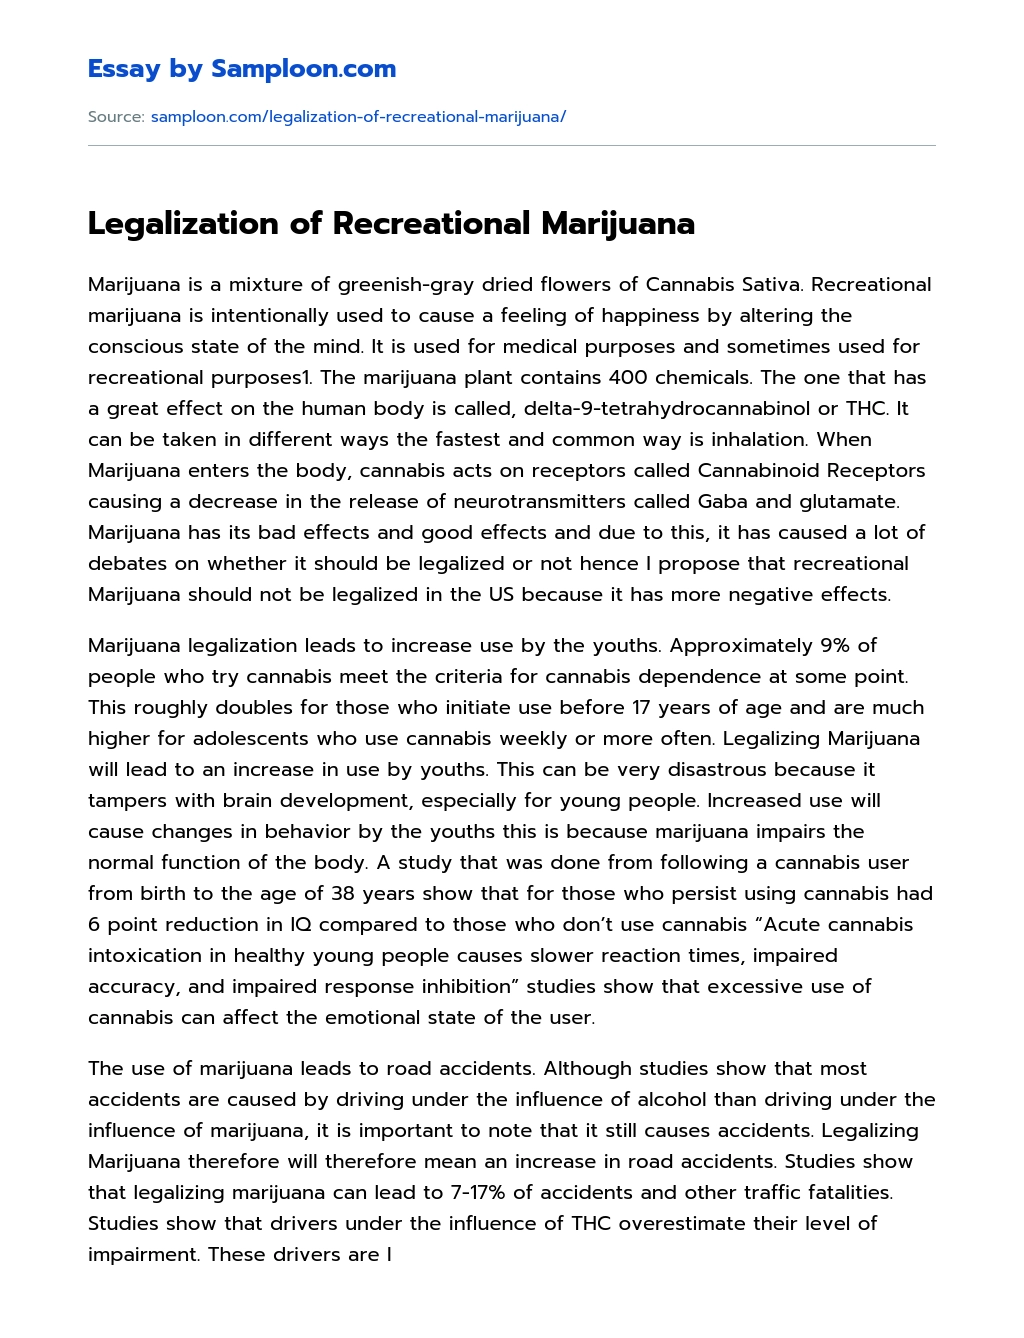 Legalization of Recreational Marijuana essay